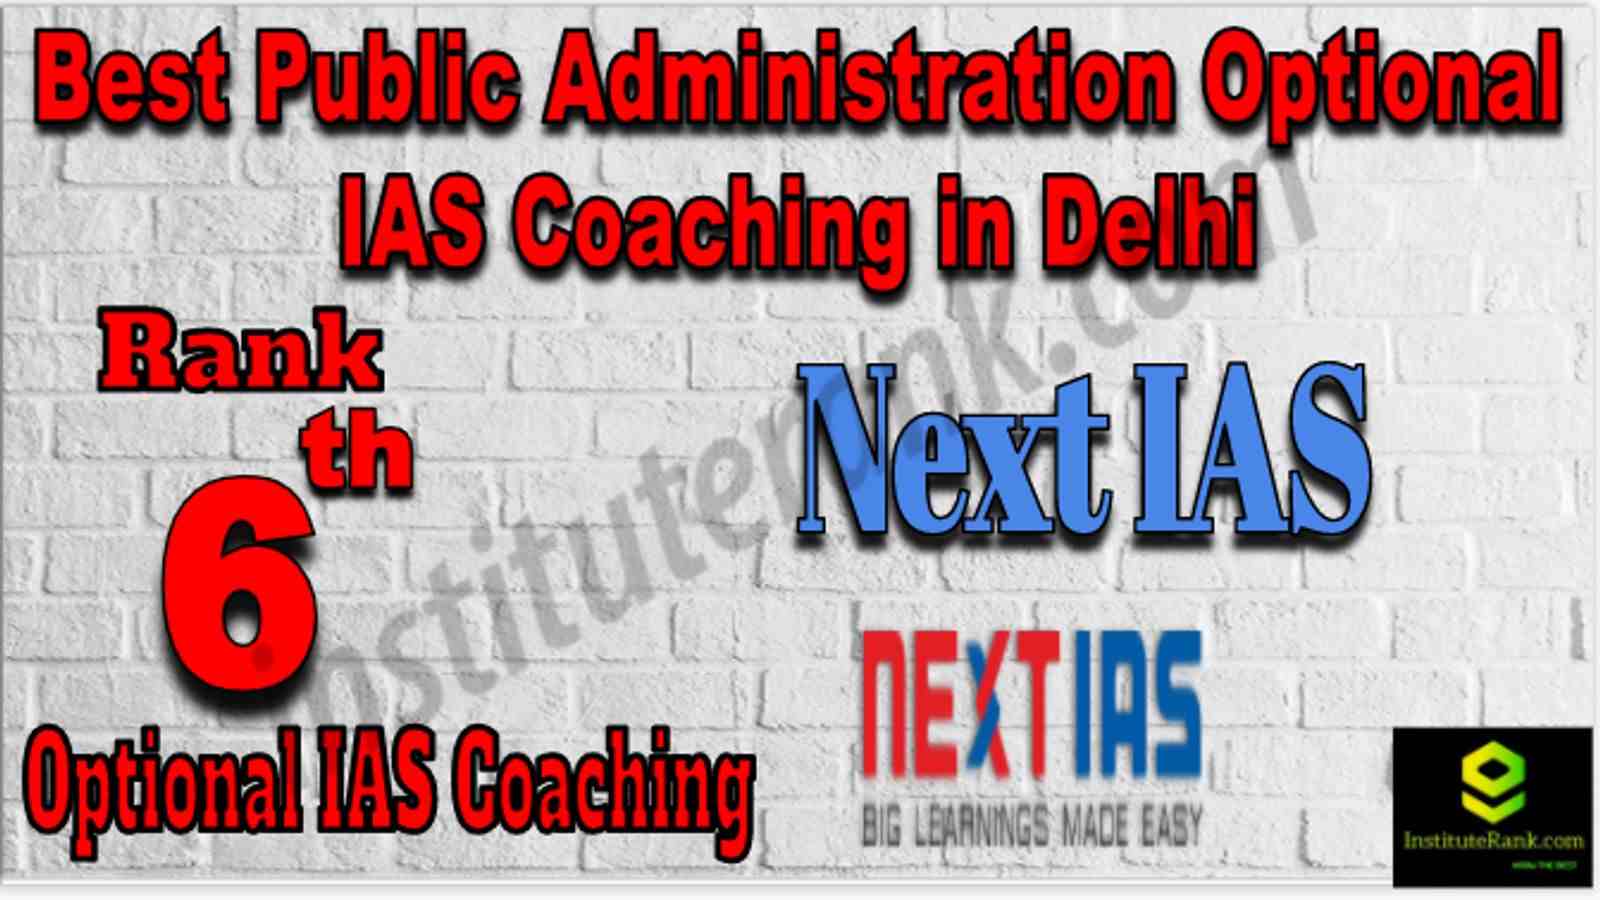 Rank 6 Best Public Administration Optional IAS Coaching